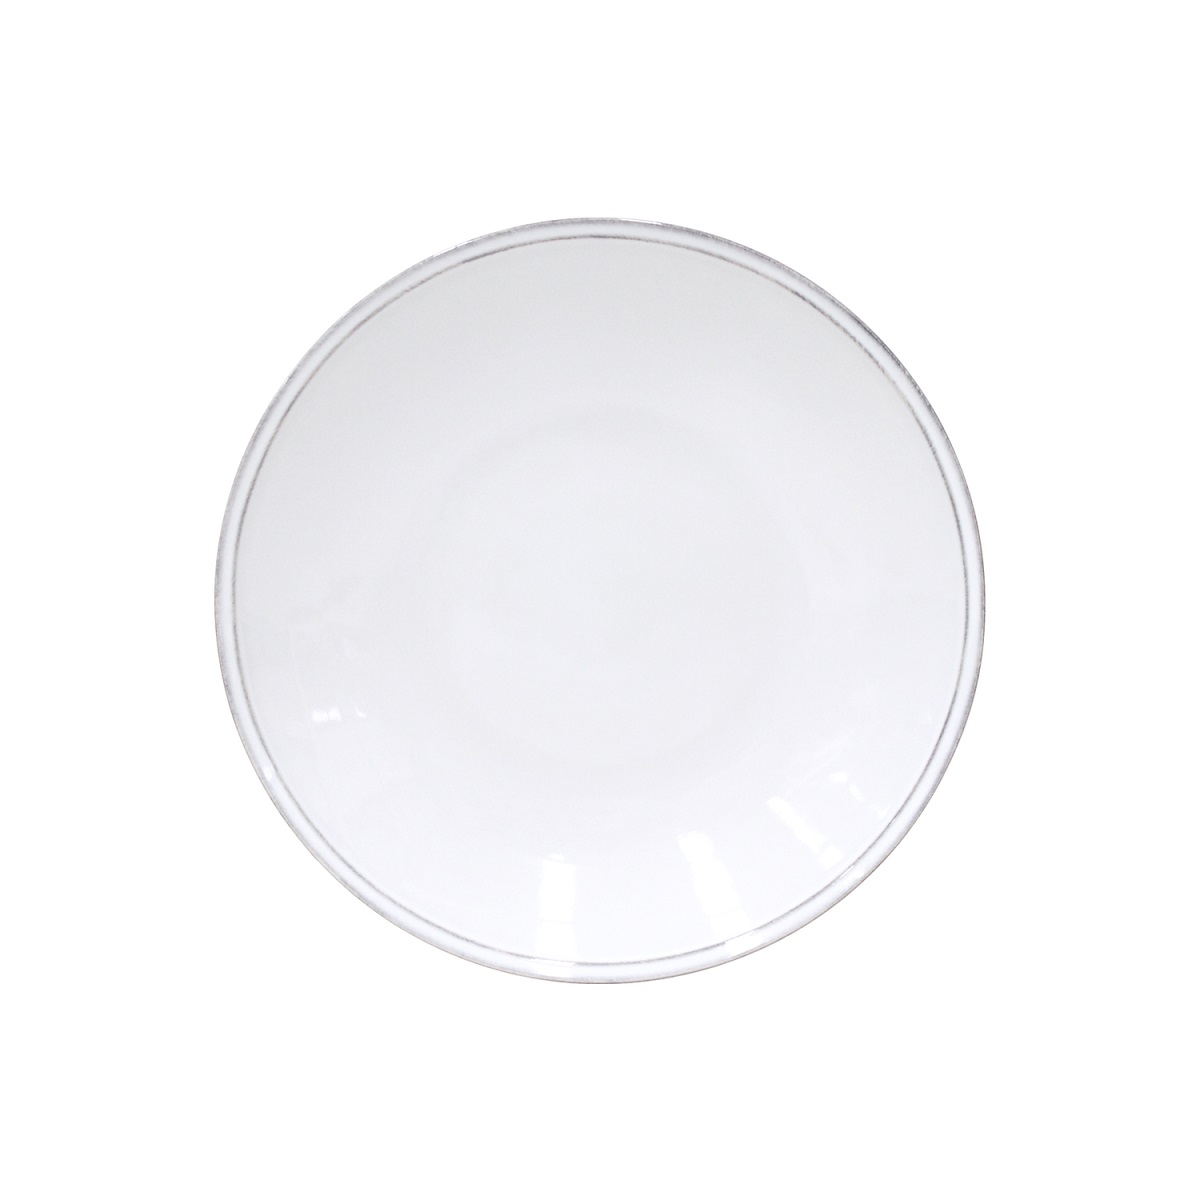 Friso White Serving Plate 28cm Gift